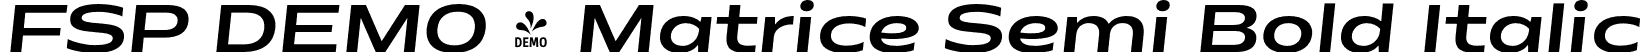 FSP DEMO - Matrice Semi Bold Italic font - Fontspring-DEMO-matrice-semibolditalic.otf